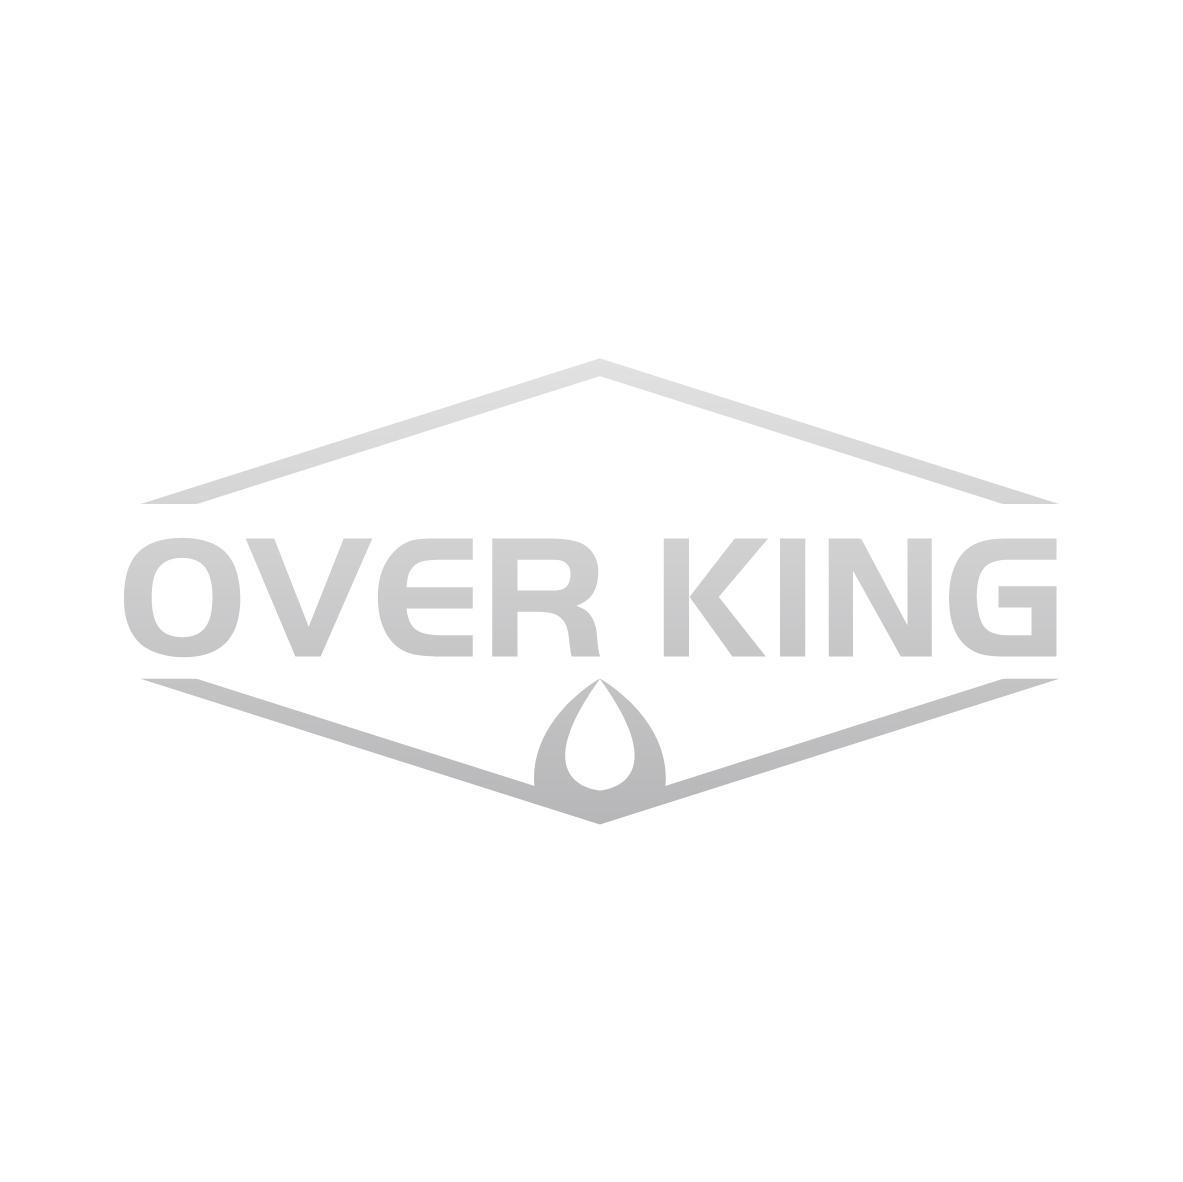 04类-燃料油脂OVER KING商标转让